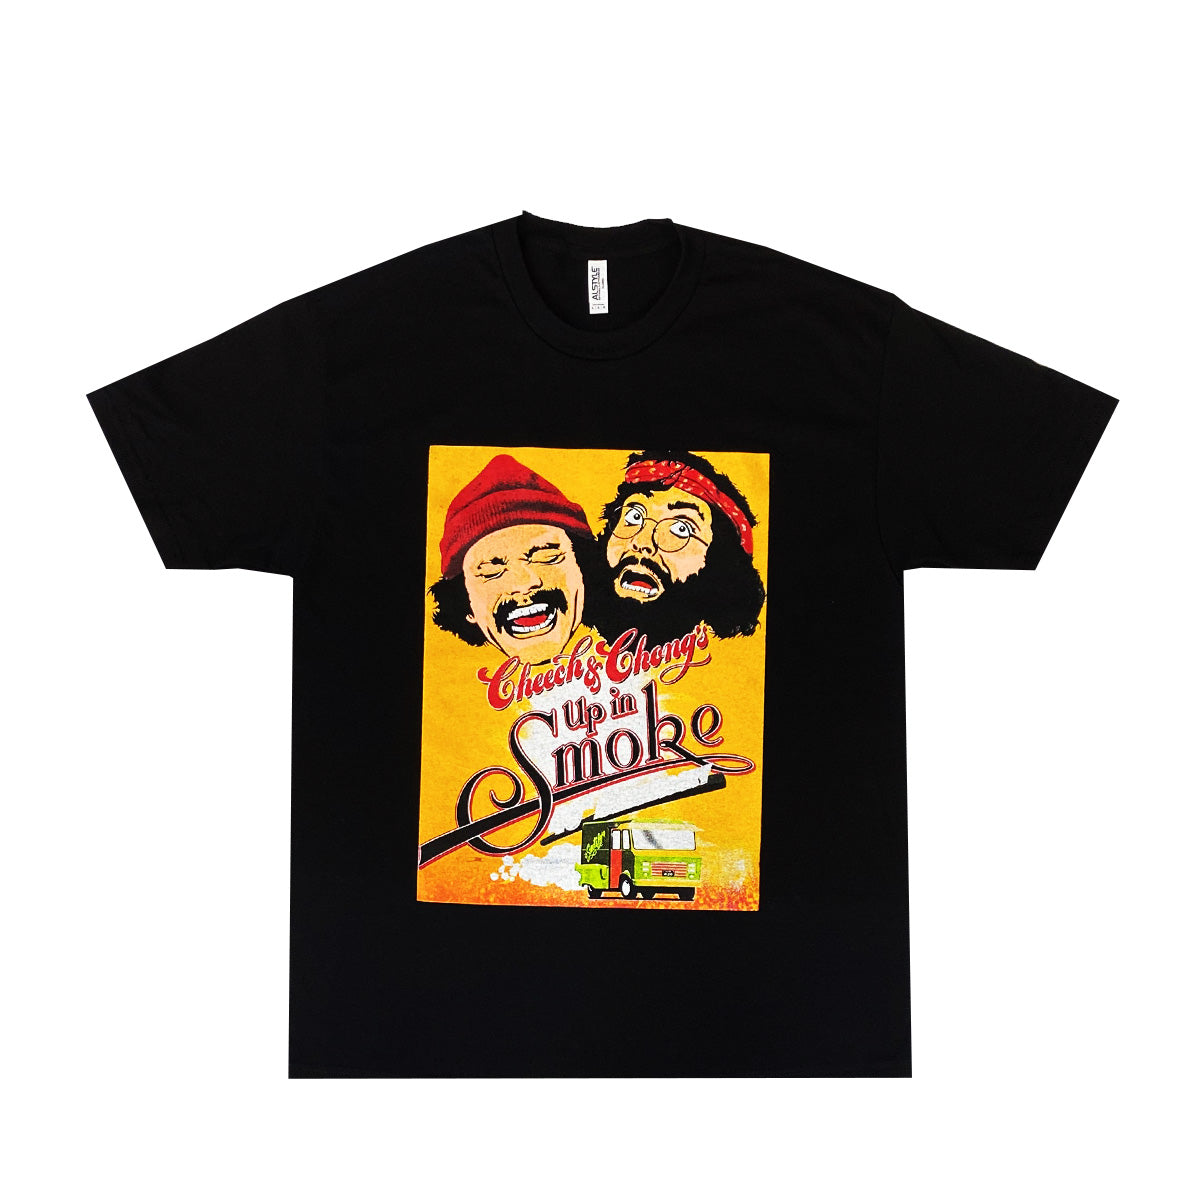 Cheech & Chong Smoke 100% Cotton T-Shirt, Pack of 5 Units, M, L, XL, XXL, XXXL